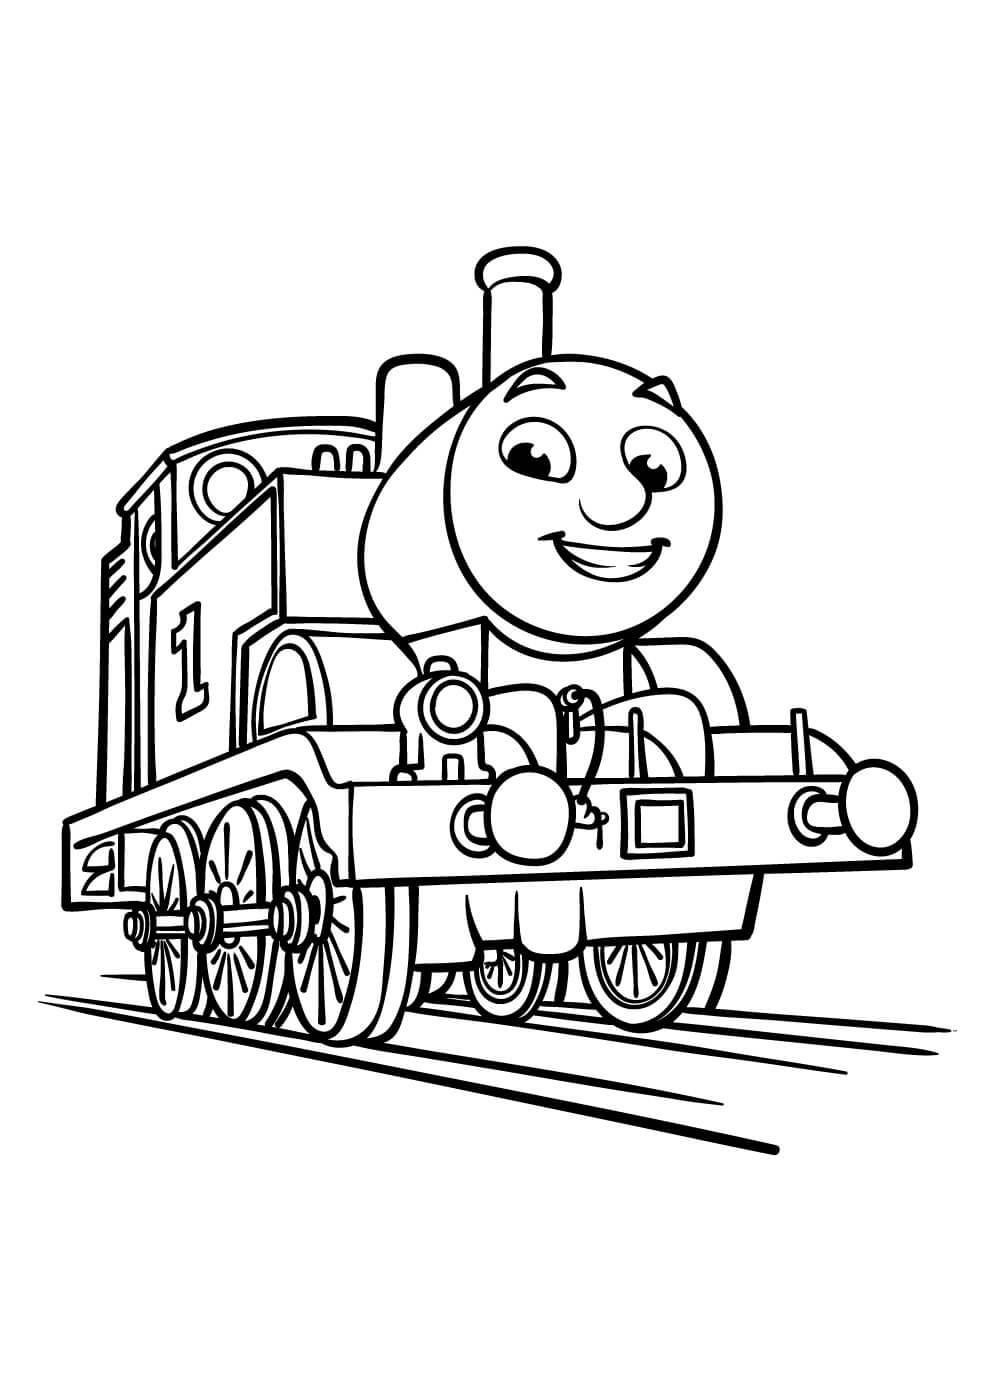 Fun thomas the train coloring page